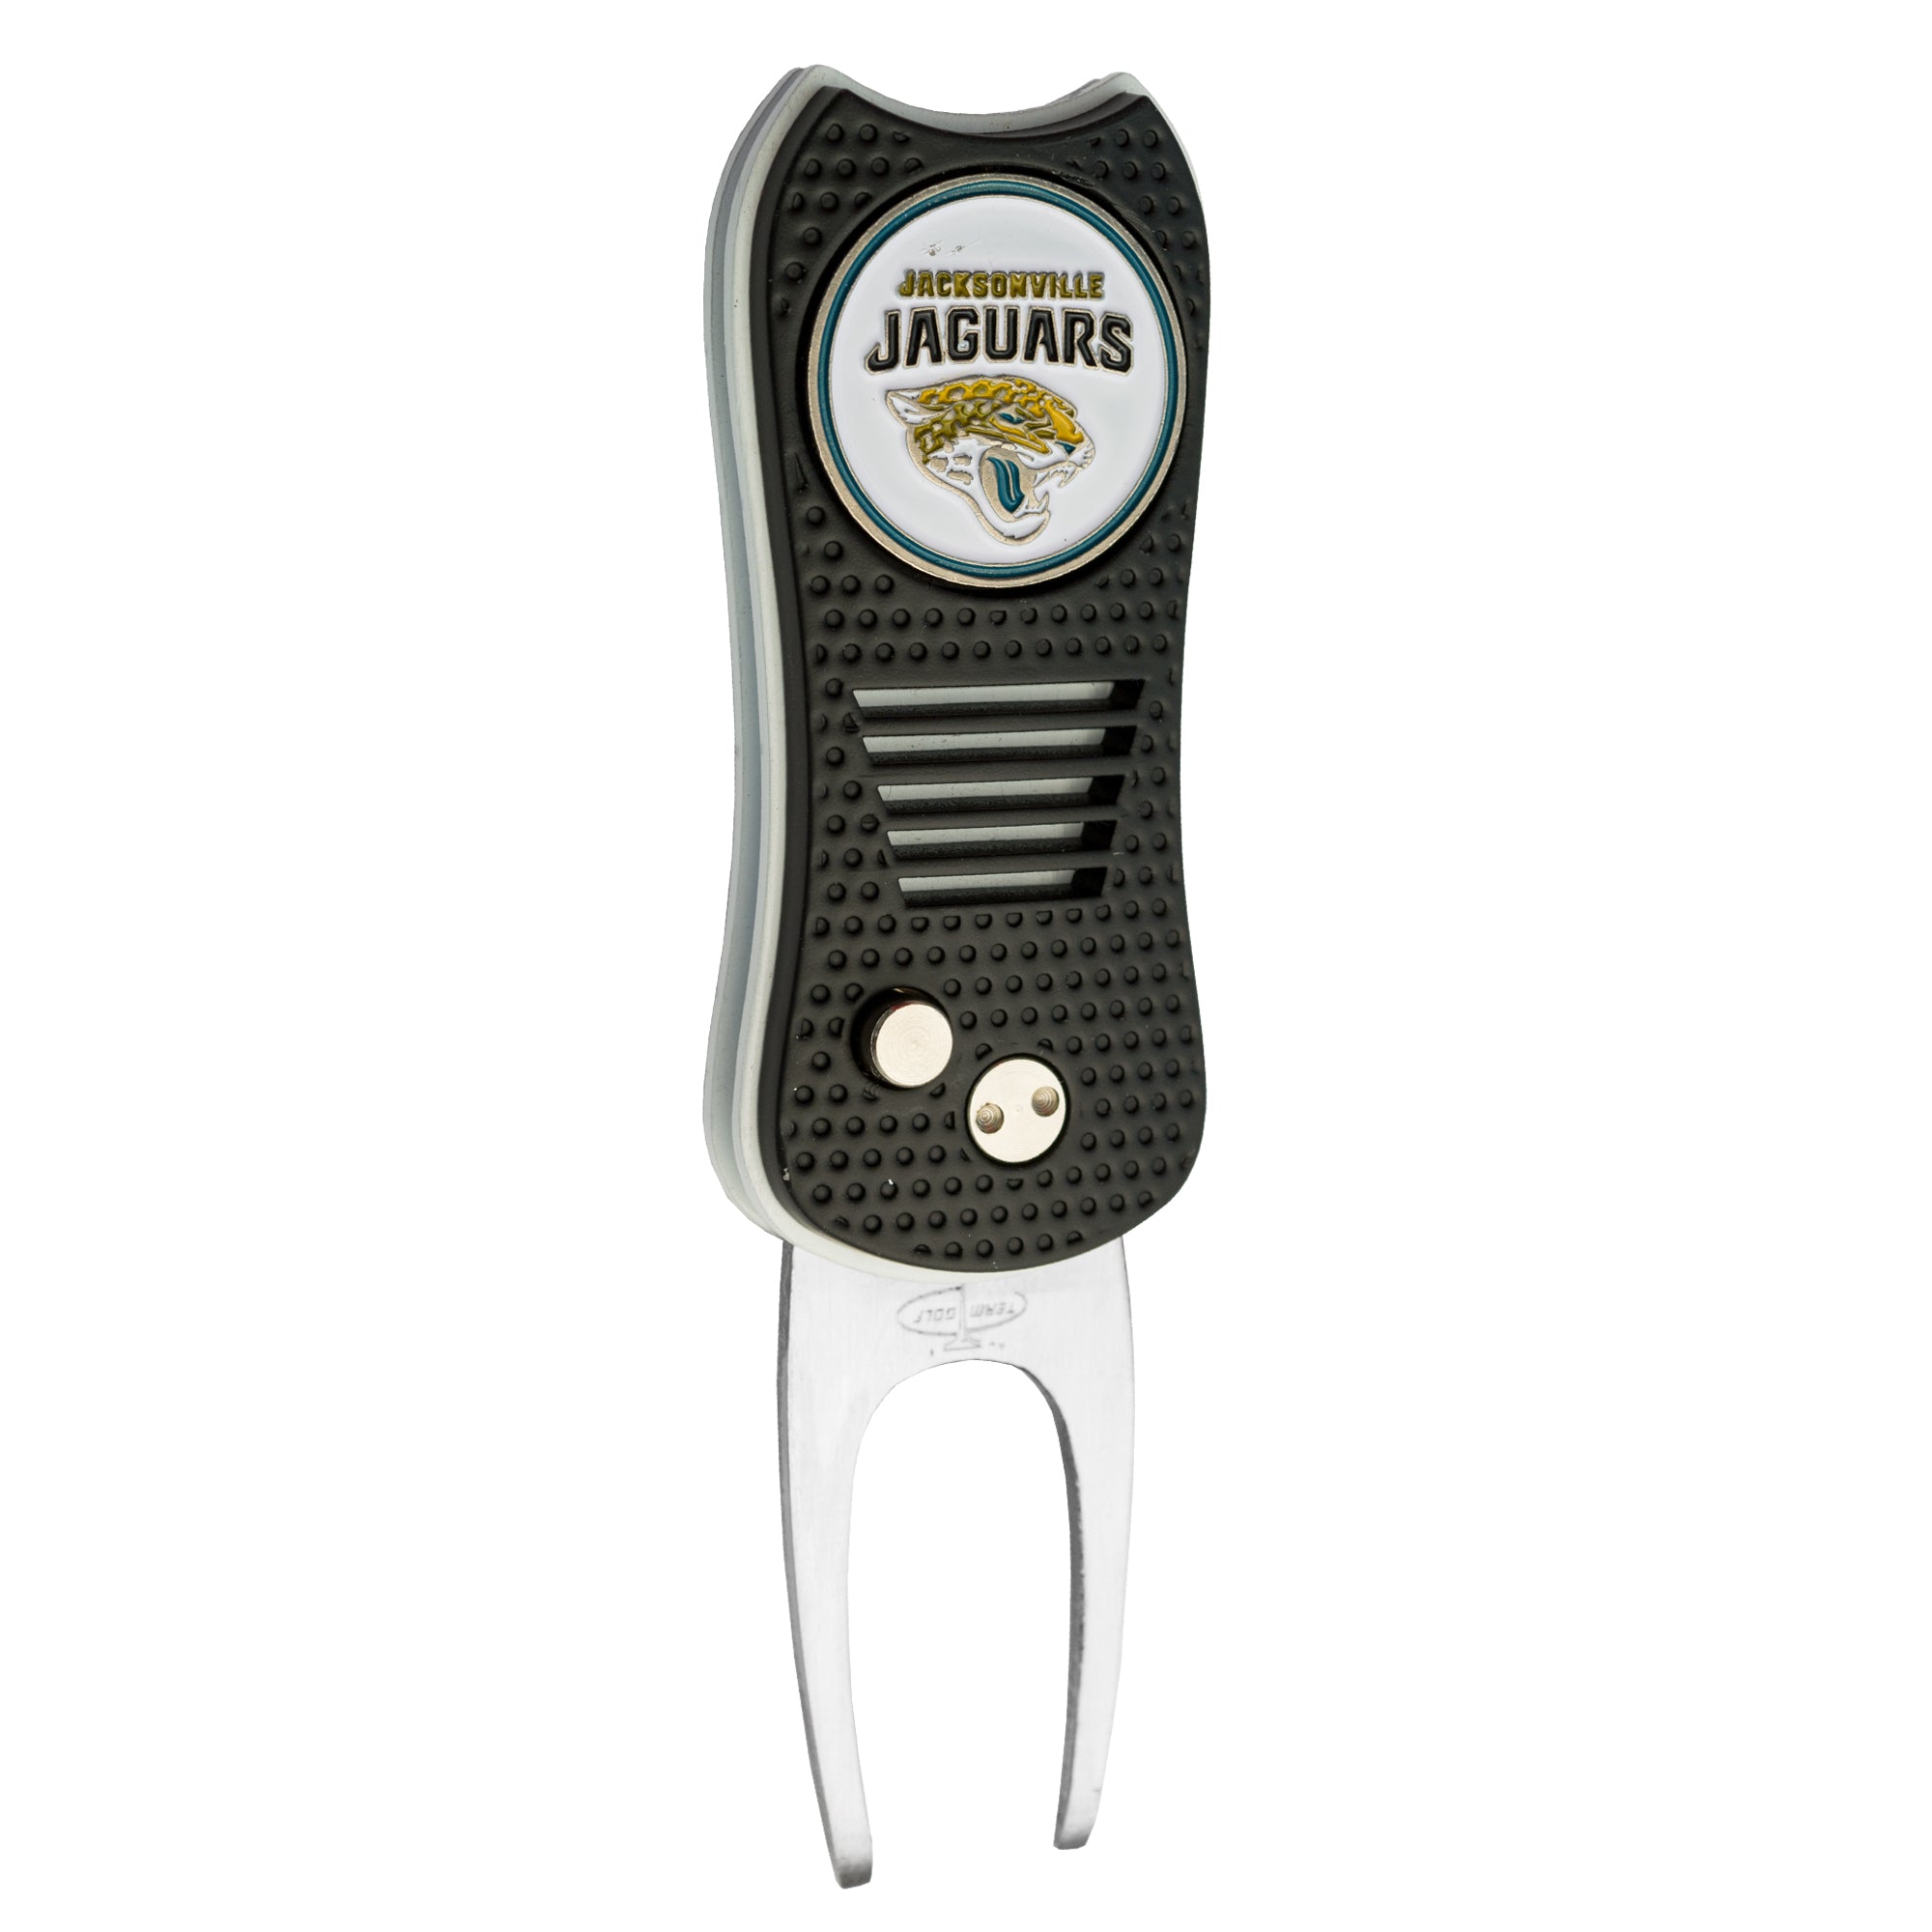 Jacksonville Jaguars Switchblade Divot Tool